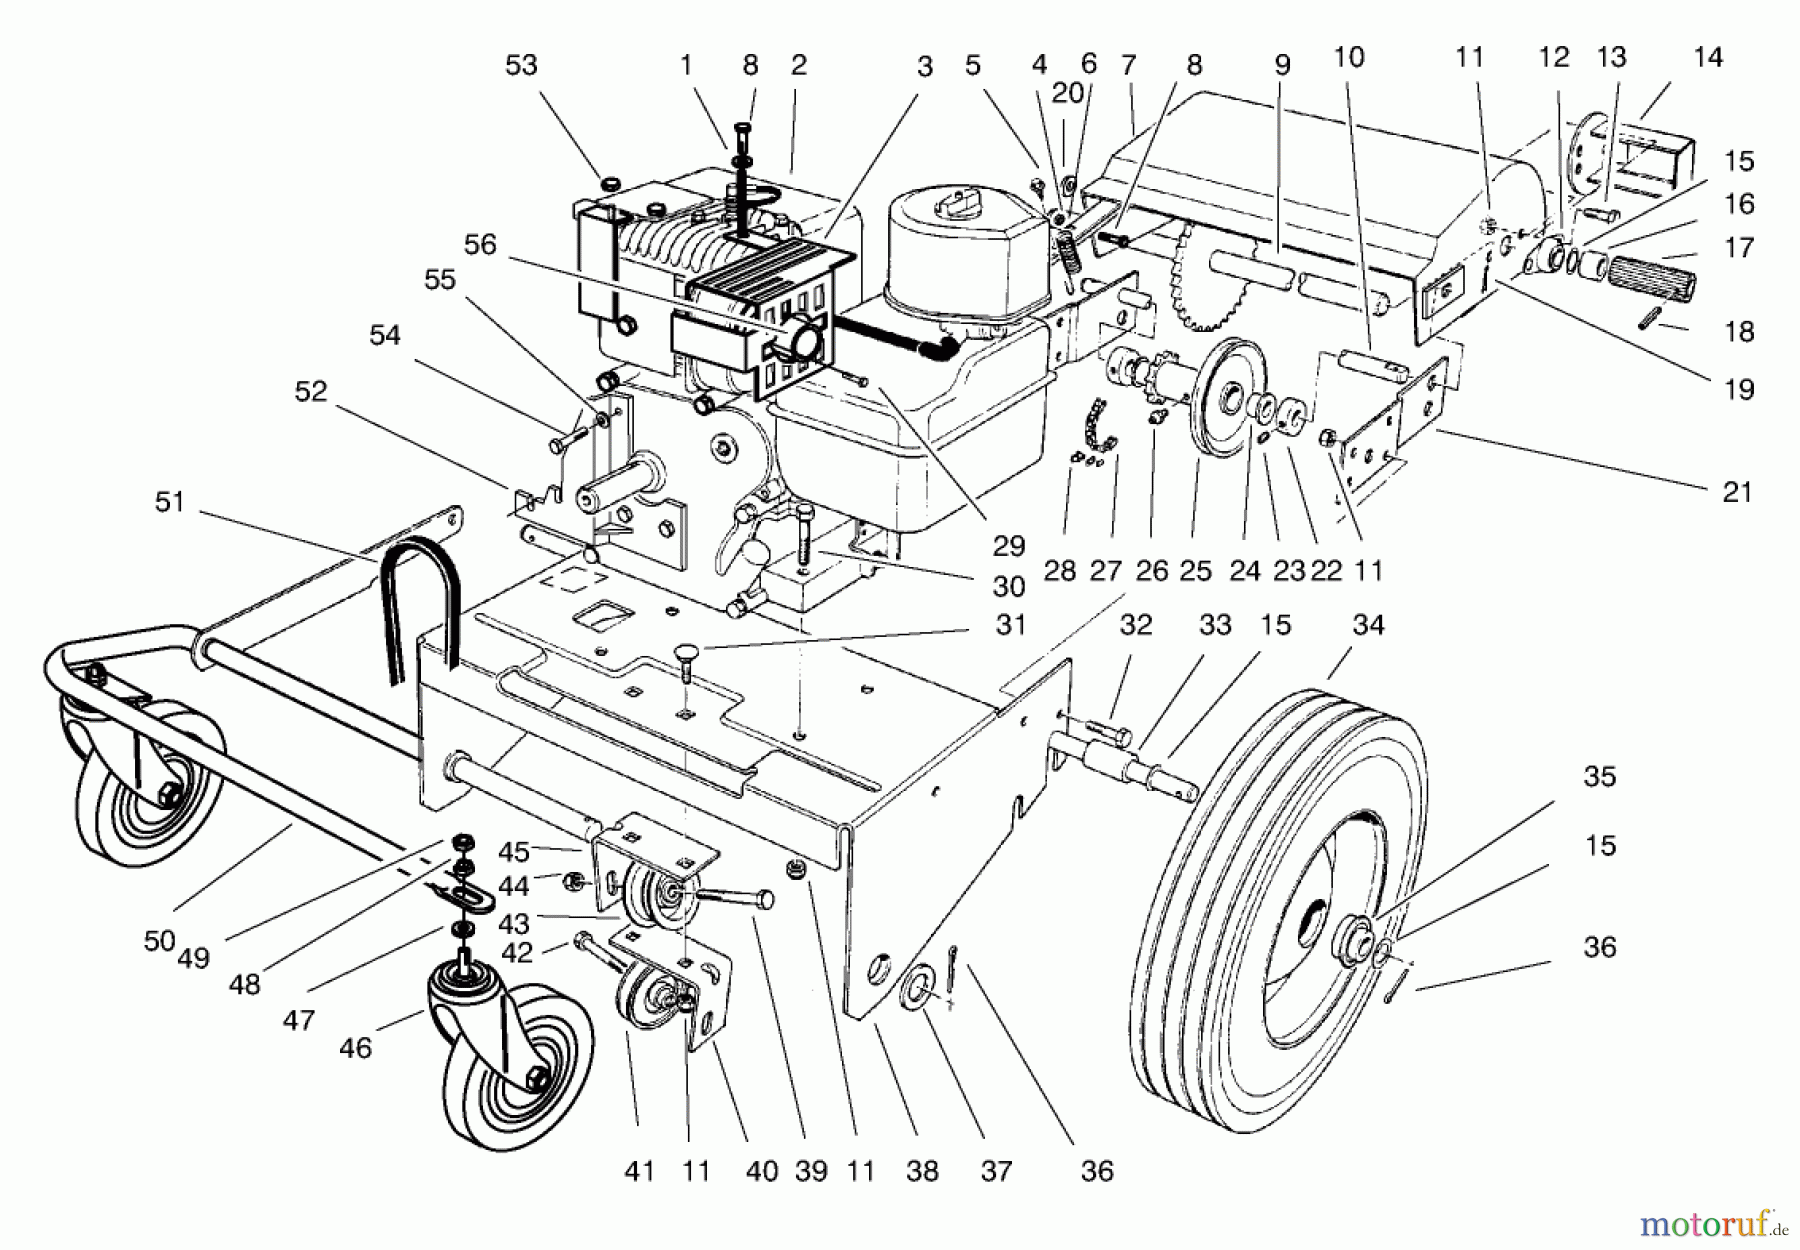  Laubbläser / Laubsauger 62924 - Toro 5 hp Lawn Vacuum (SN: 8900001 - 8999999) (1998) ENGINE & BASE ASSEMBLY